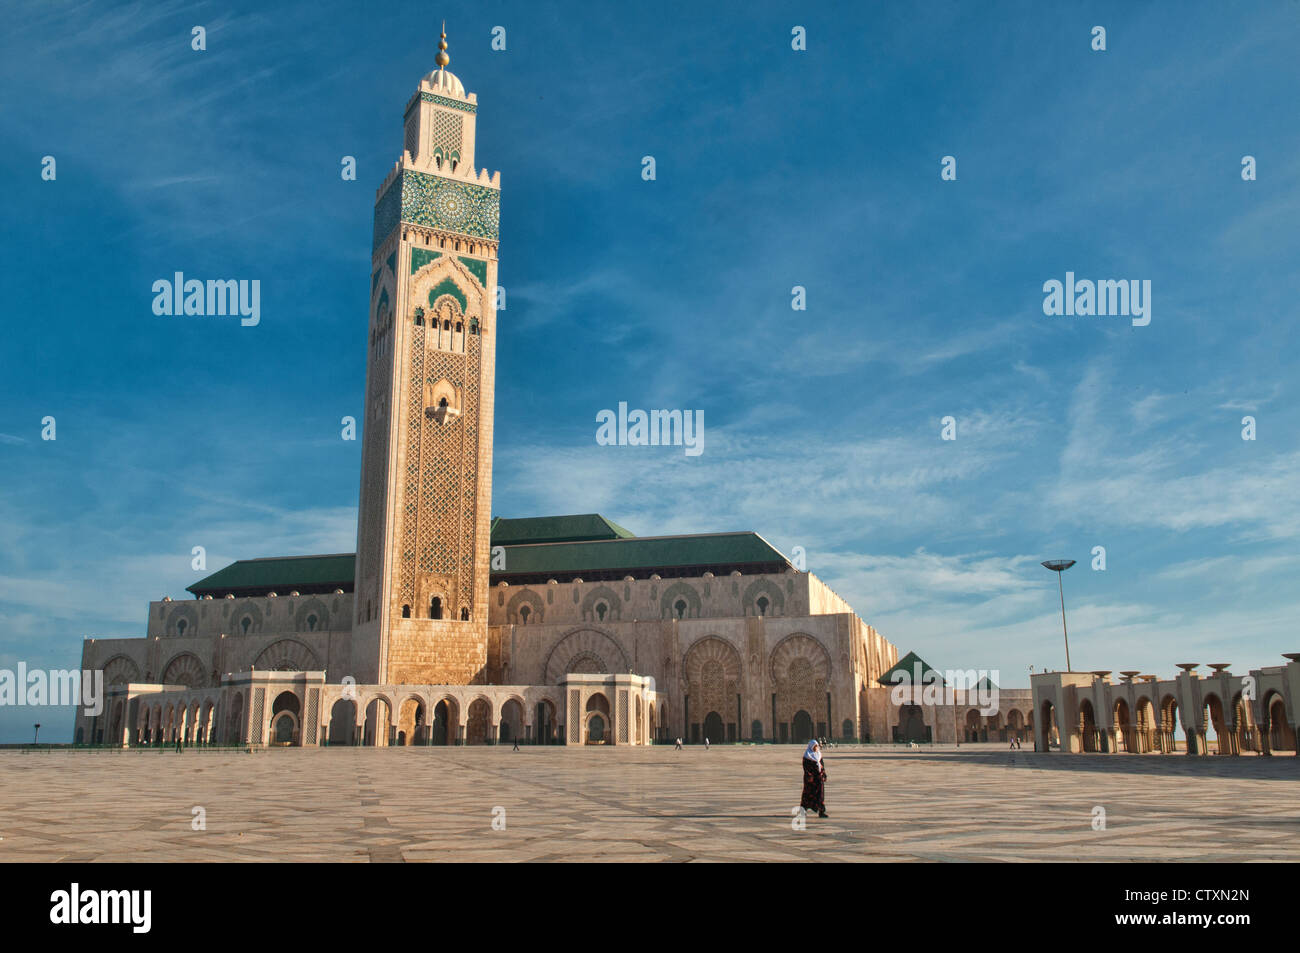 The amazing Hassan II Mosque in Casablanca, Morocco Stock Photo